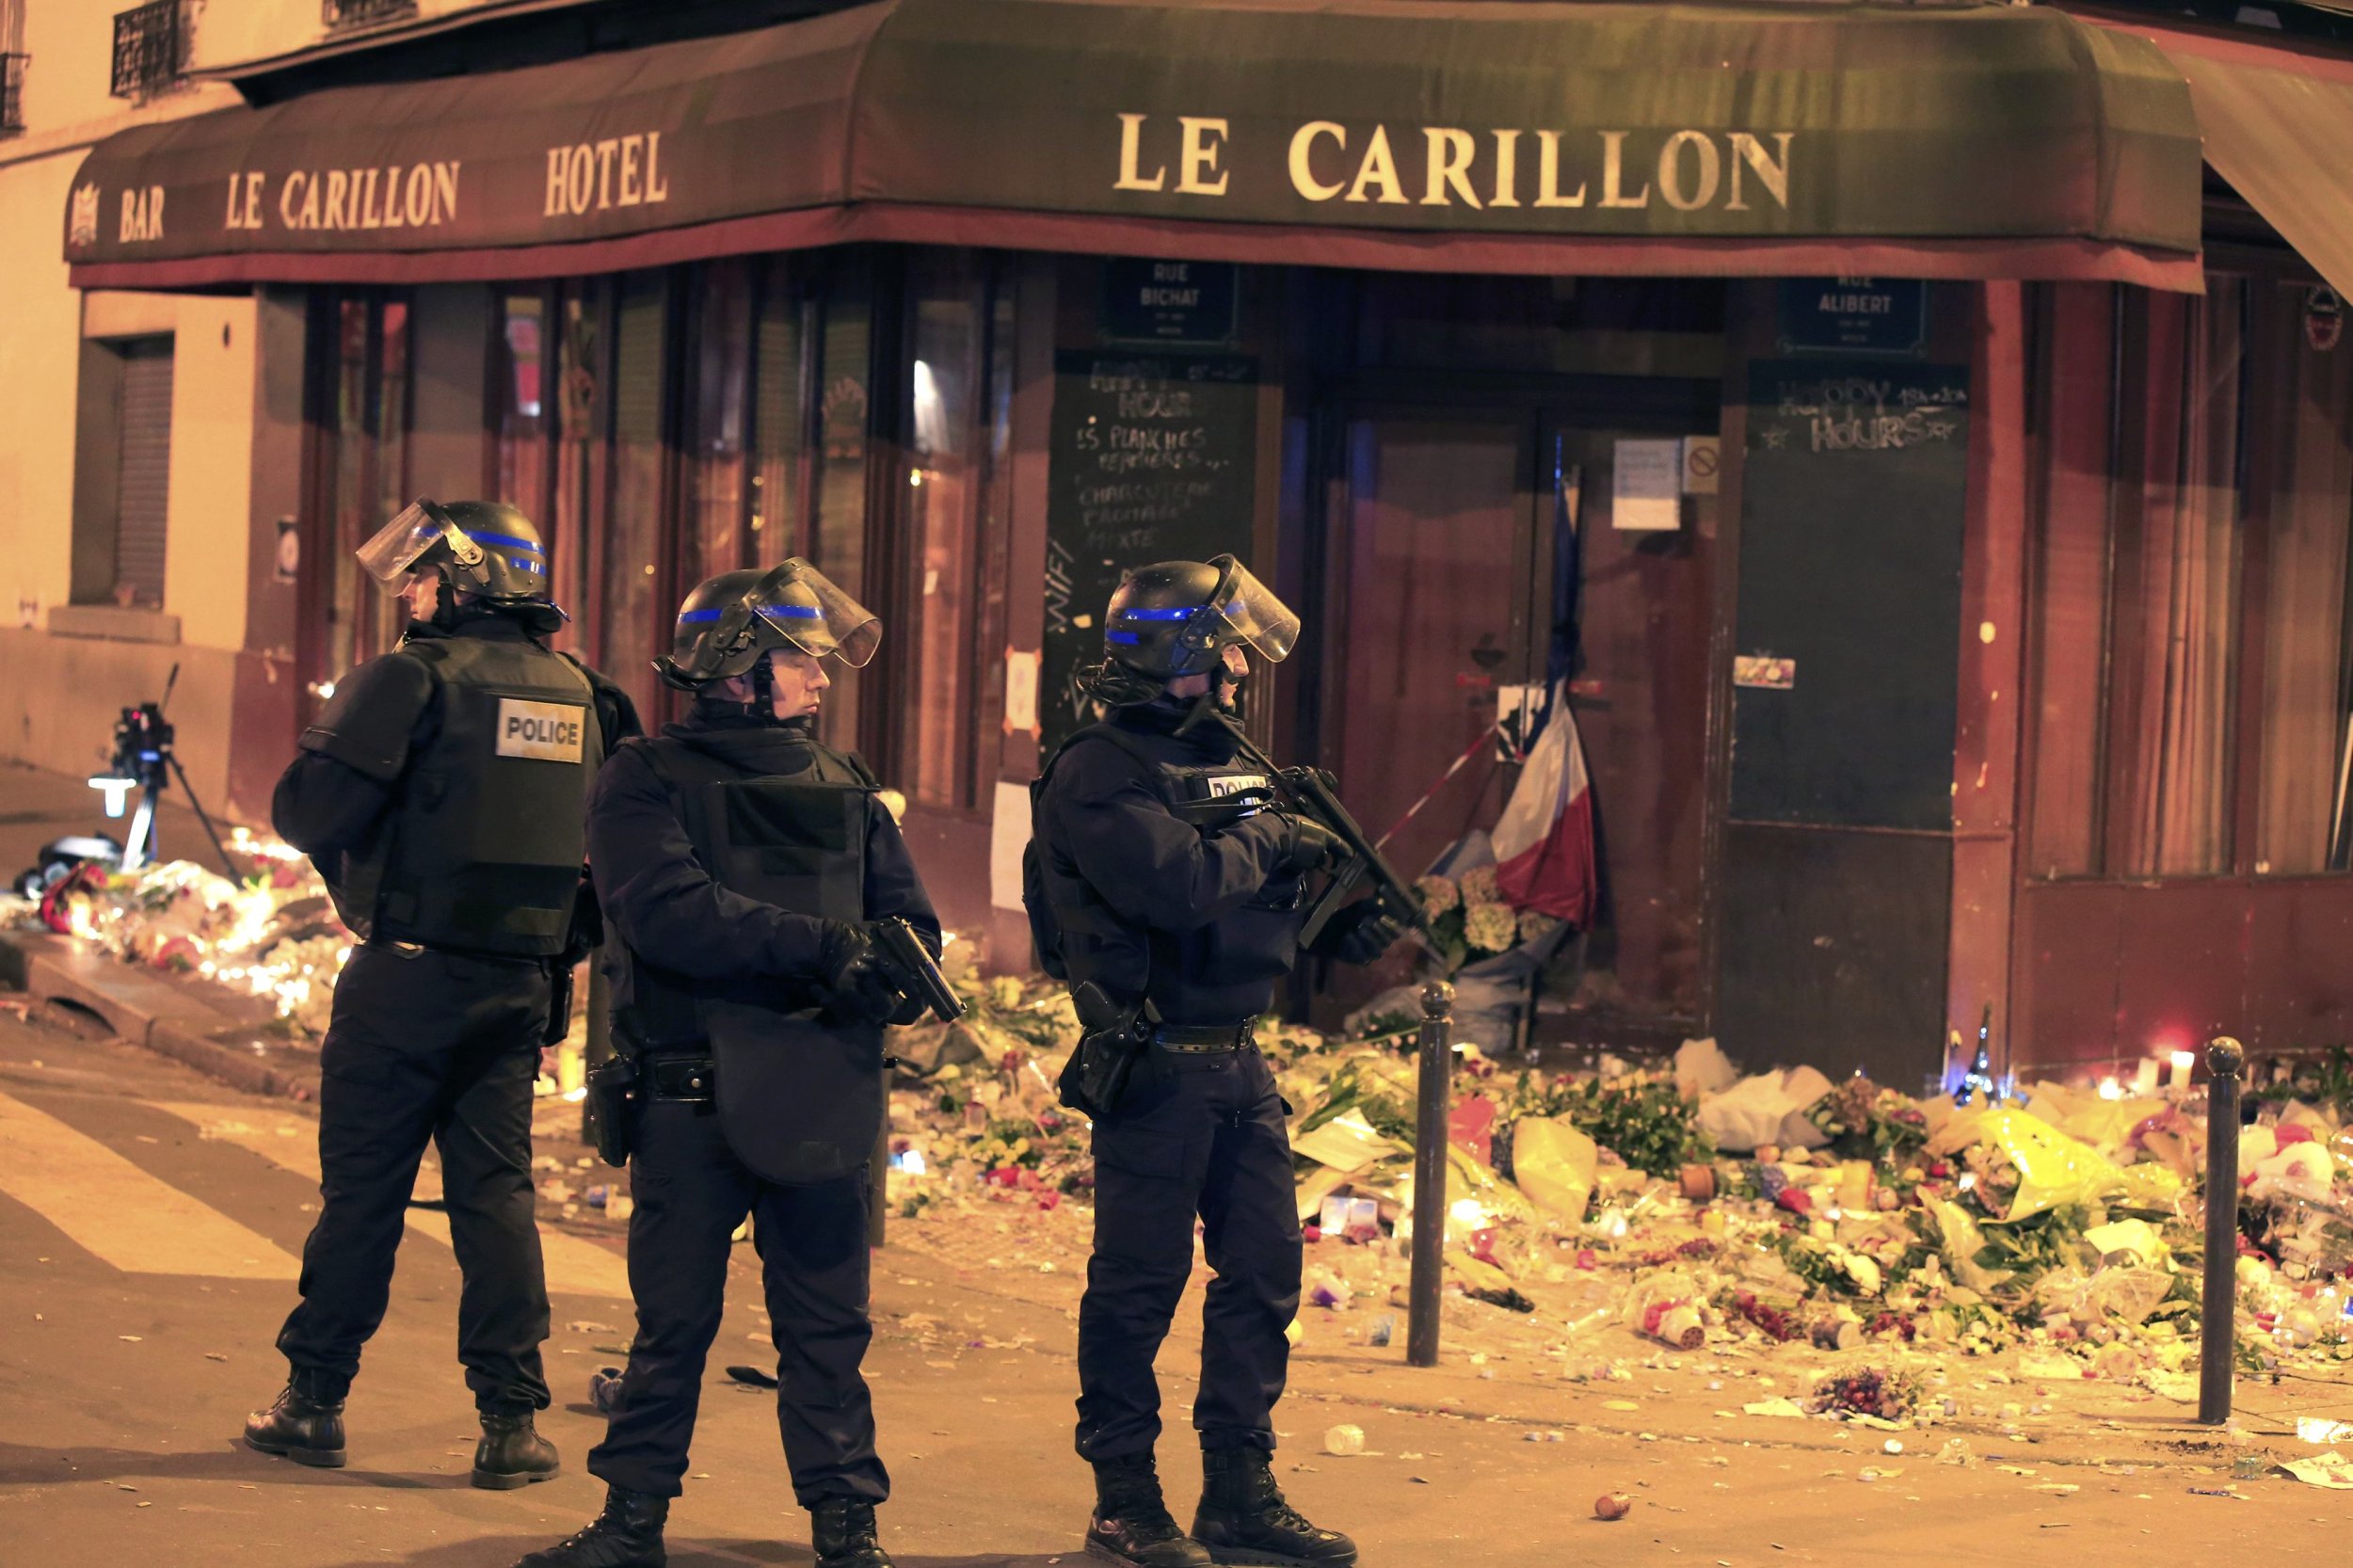 Теракт по английски. Теракт в Париже 13 ноября 2015. 13 Ноября 2015 Франция теракт.